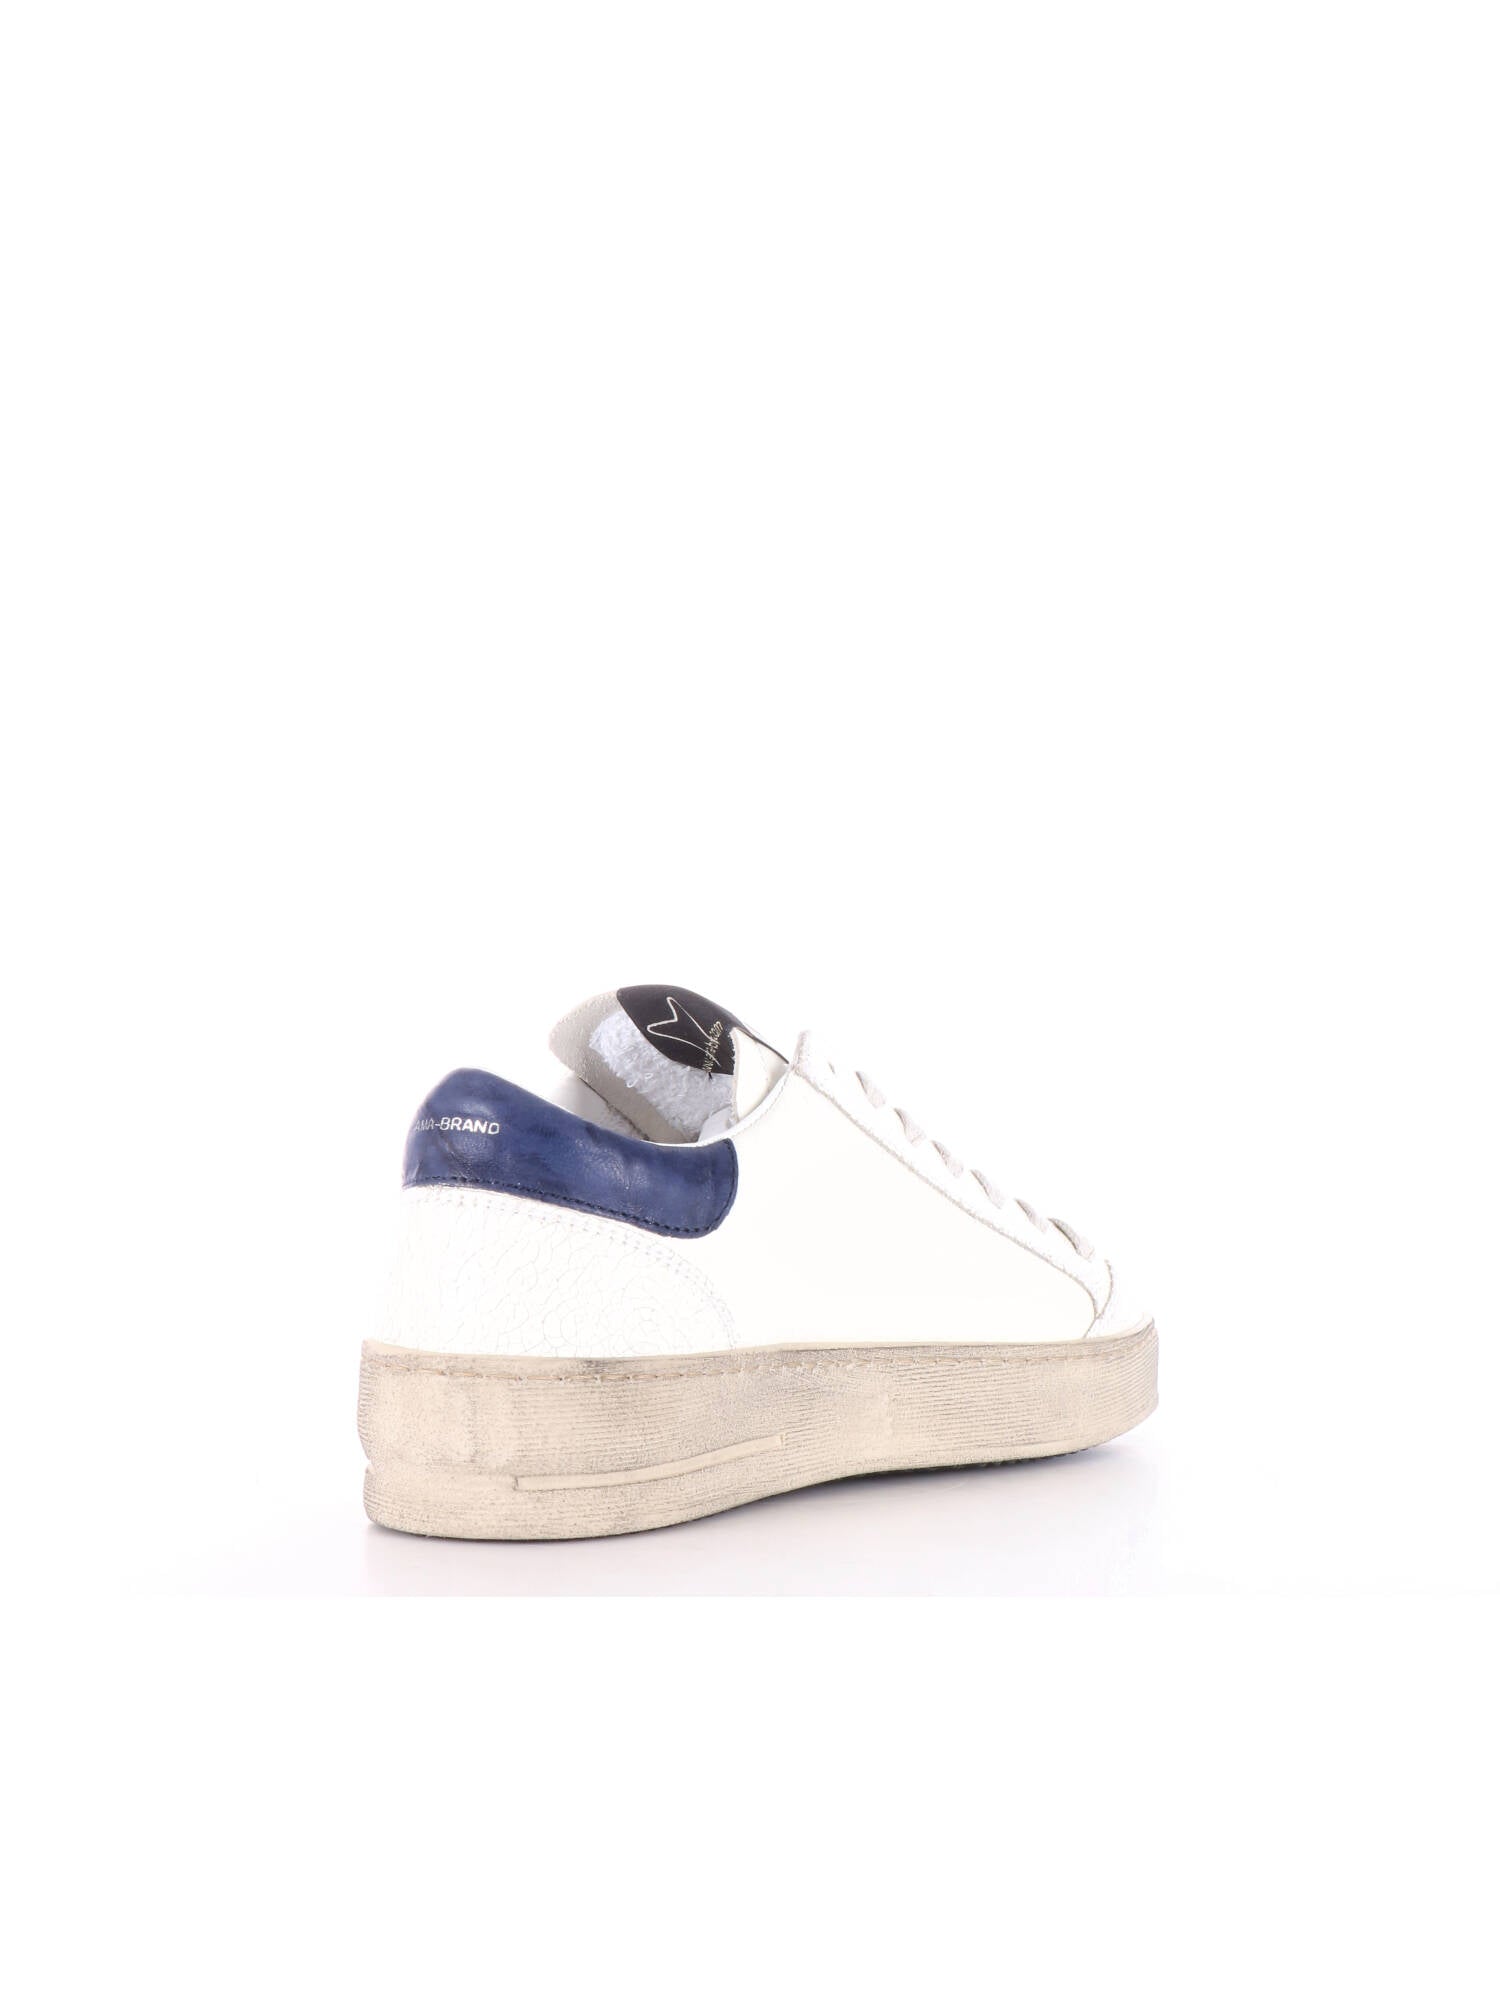 Ama-brand Sneakers uomo Slam bianco/blu